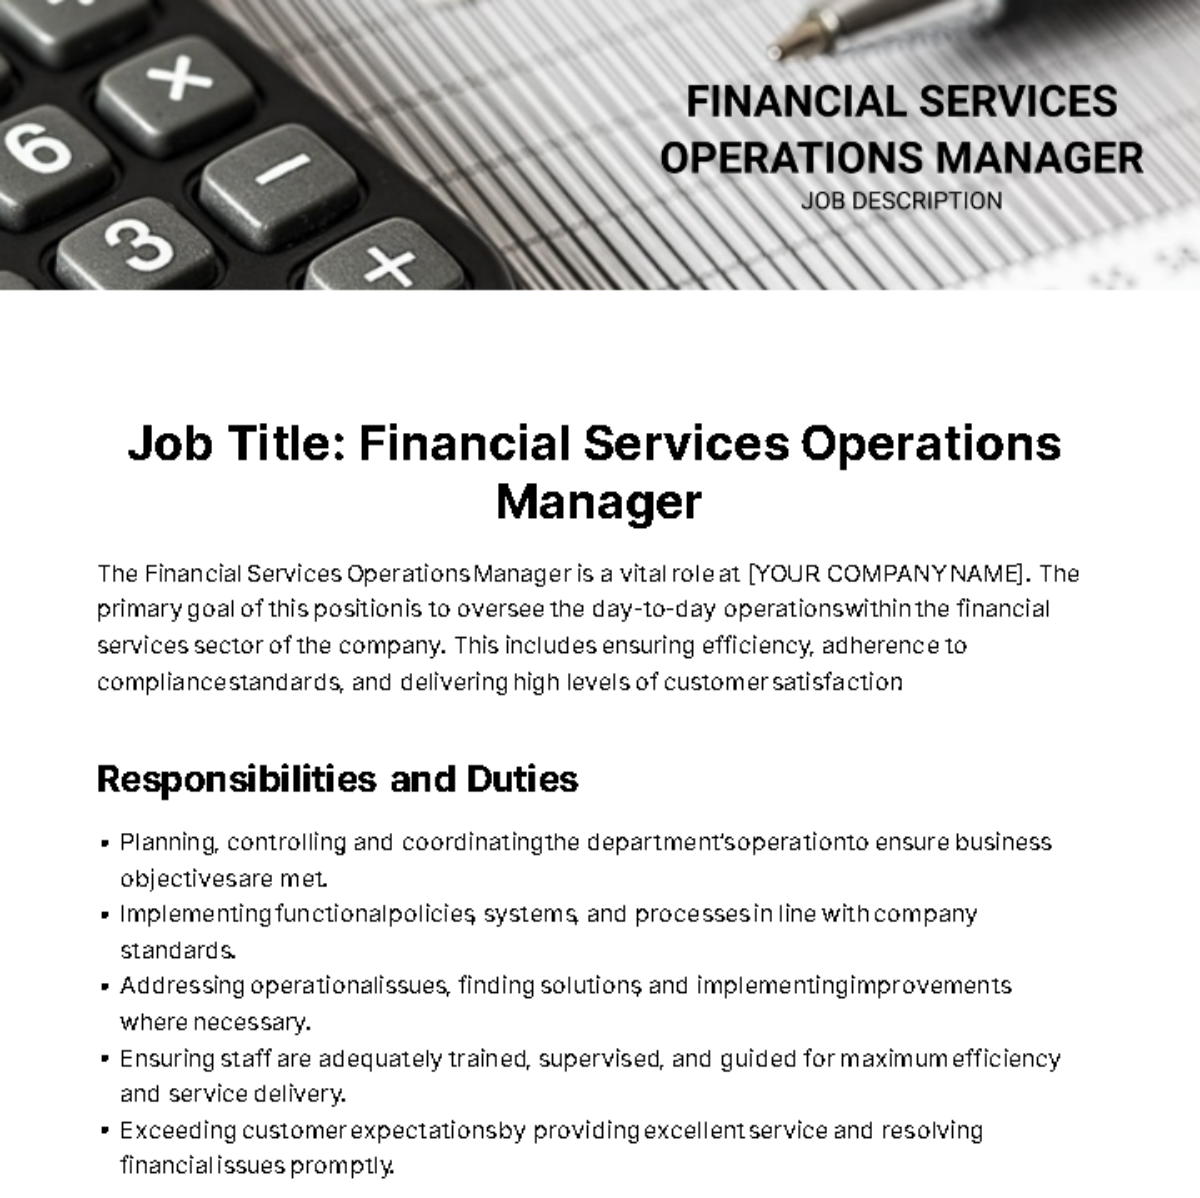 Financial Services Operations Manager Job Description Template